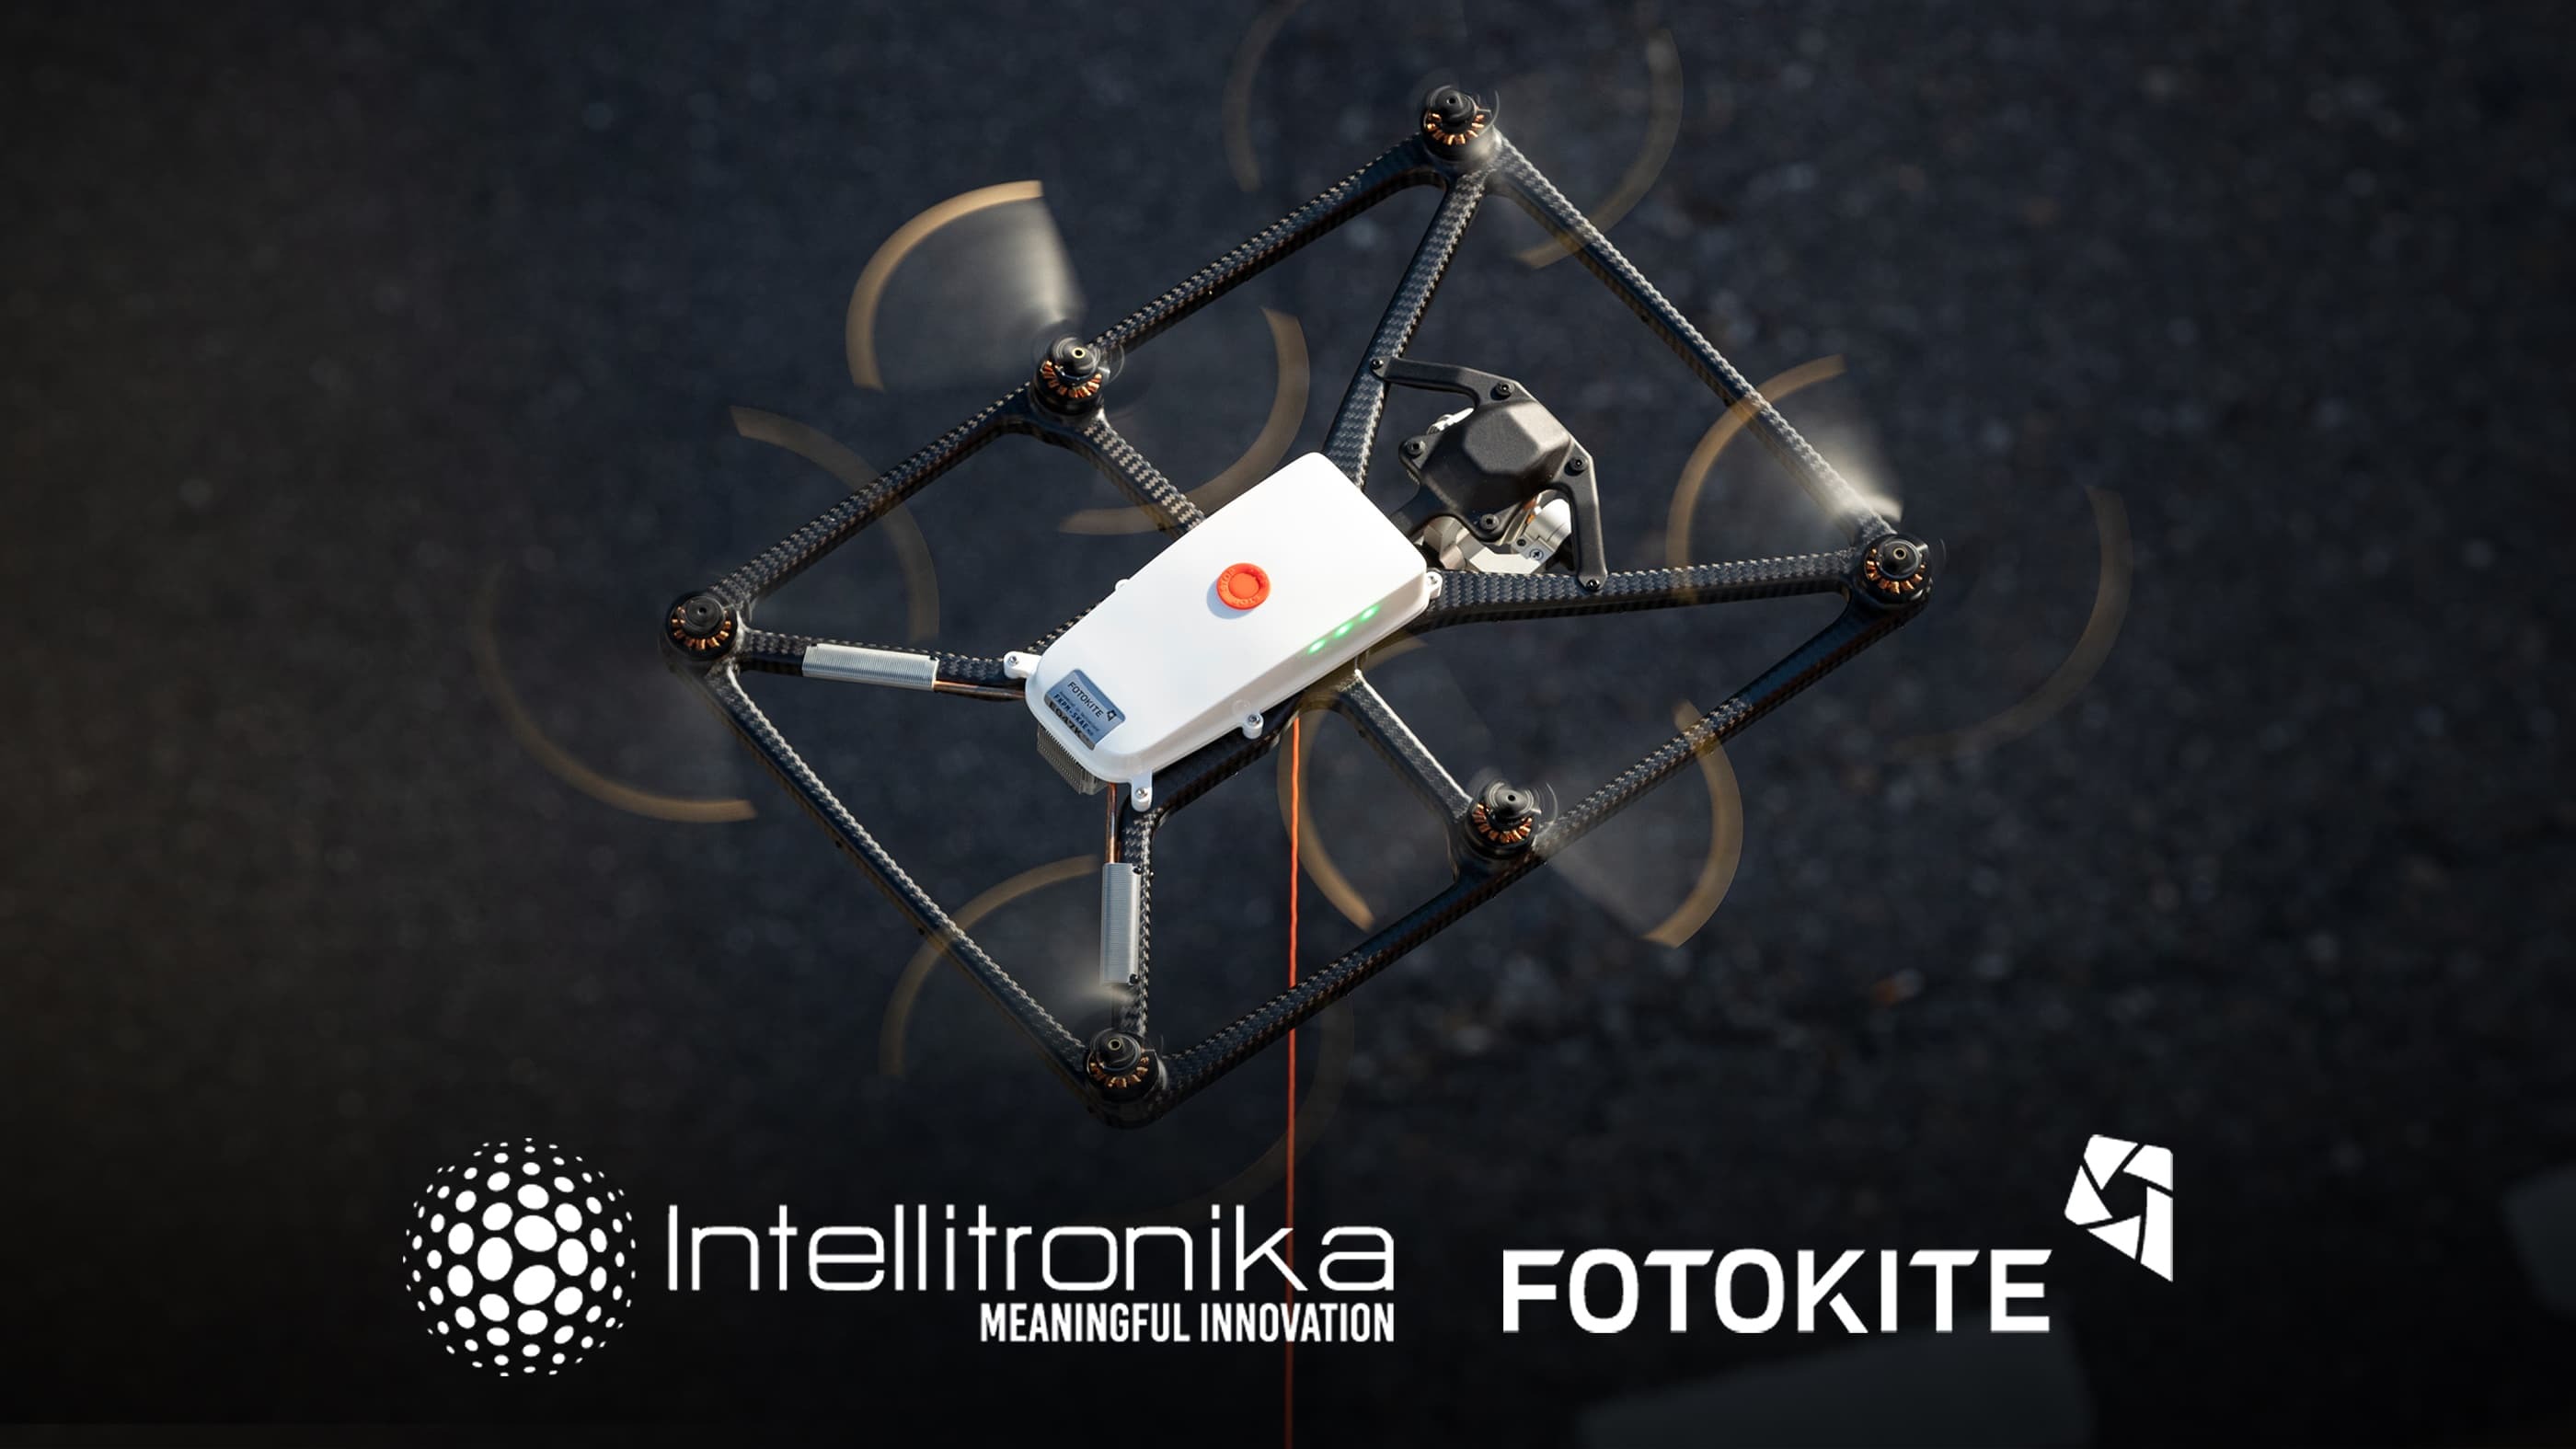 Intellitronika Fotokite partnership announcement